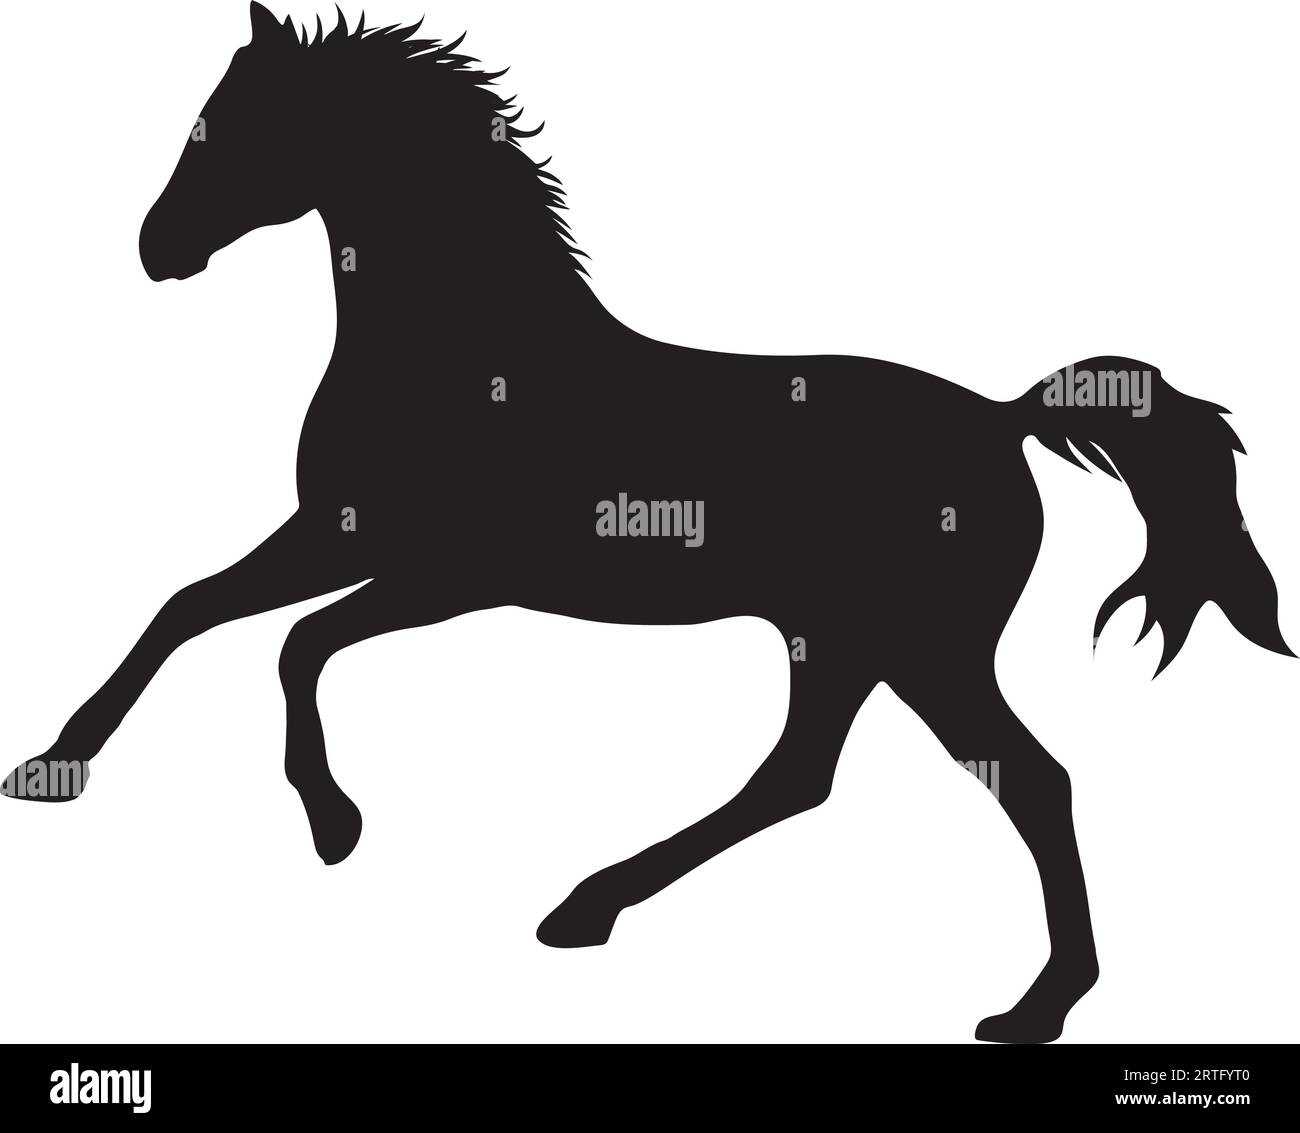 Running horse vector, silhouette or illustration file Stock Vector